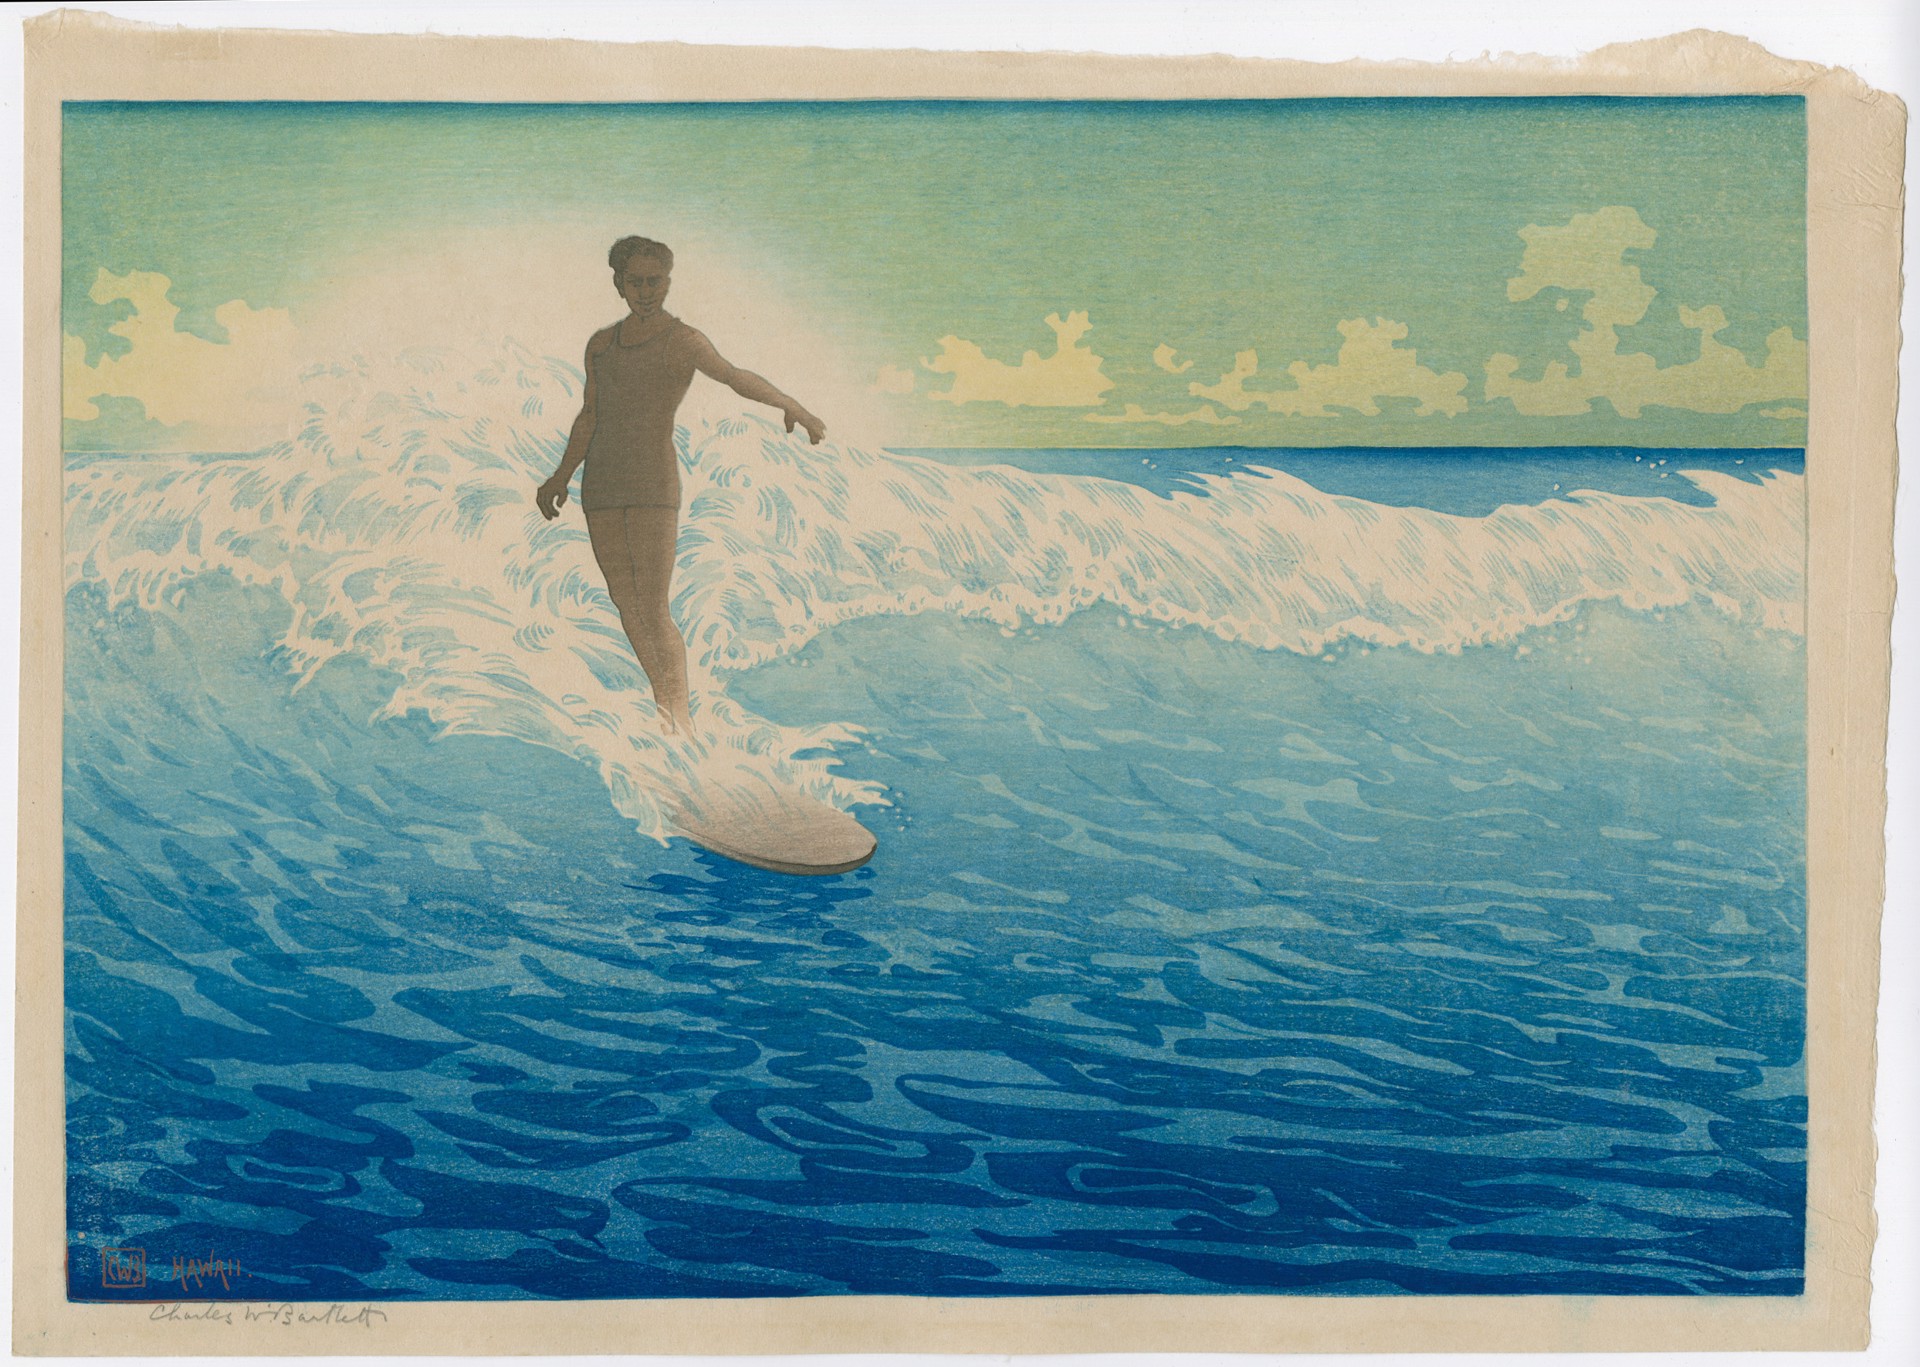 Hawaii; Surf Rider, aka The Duke by Charles Bartlett